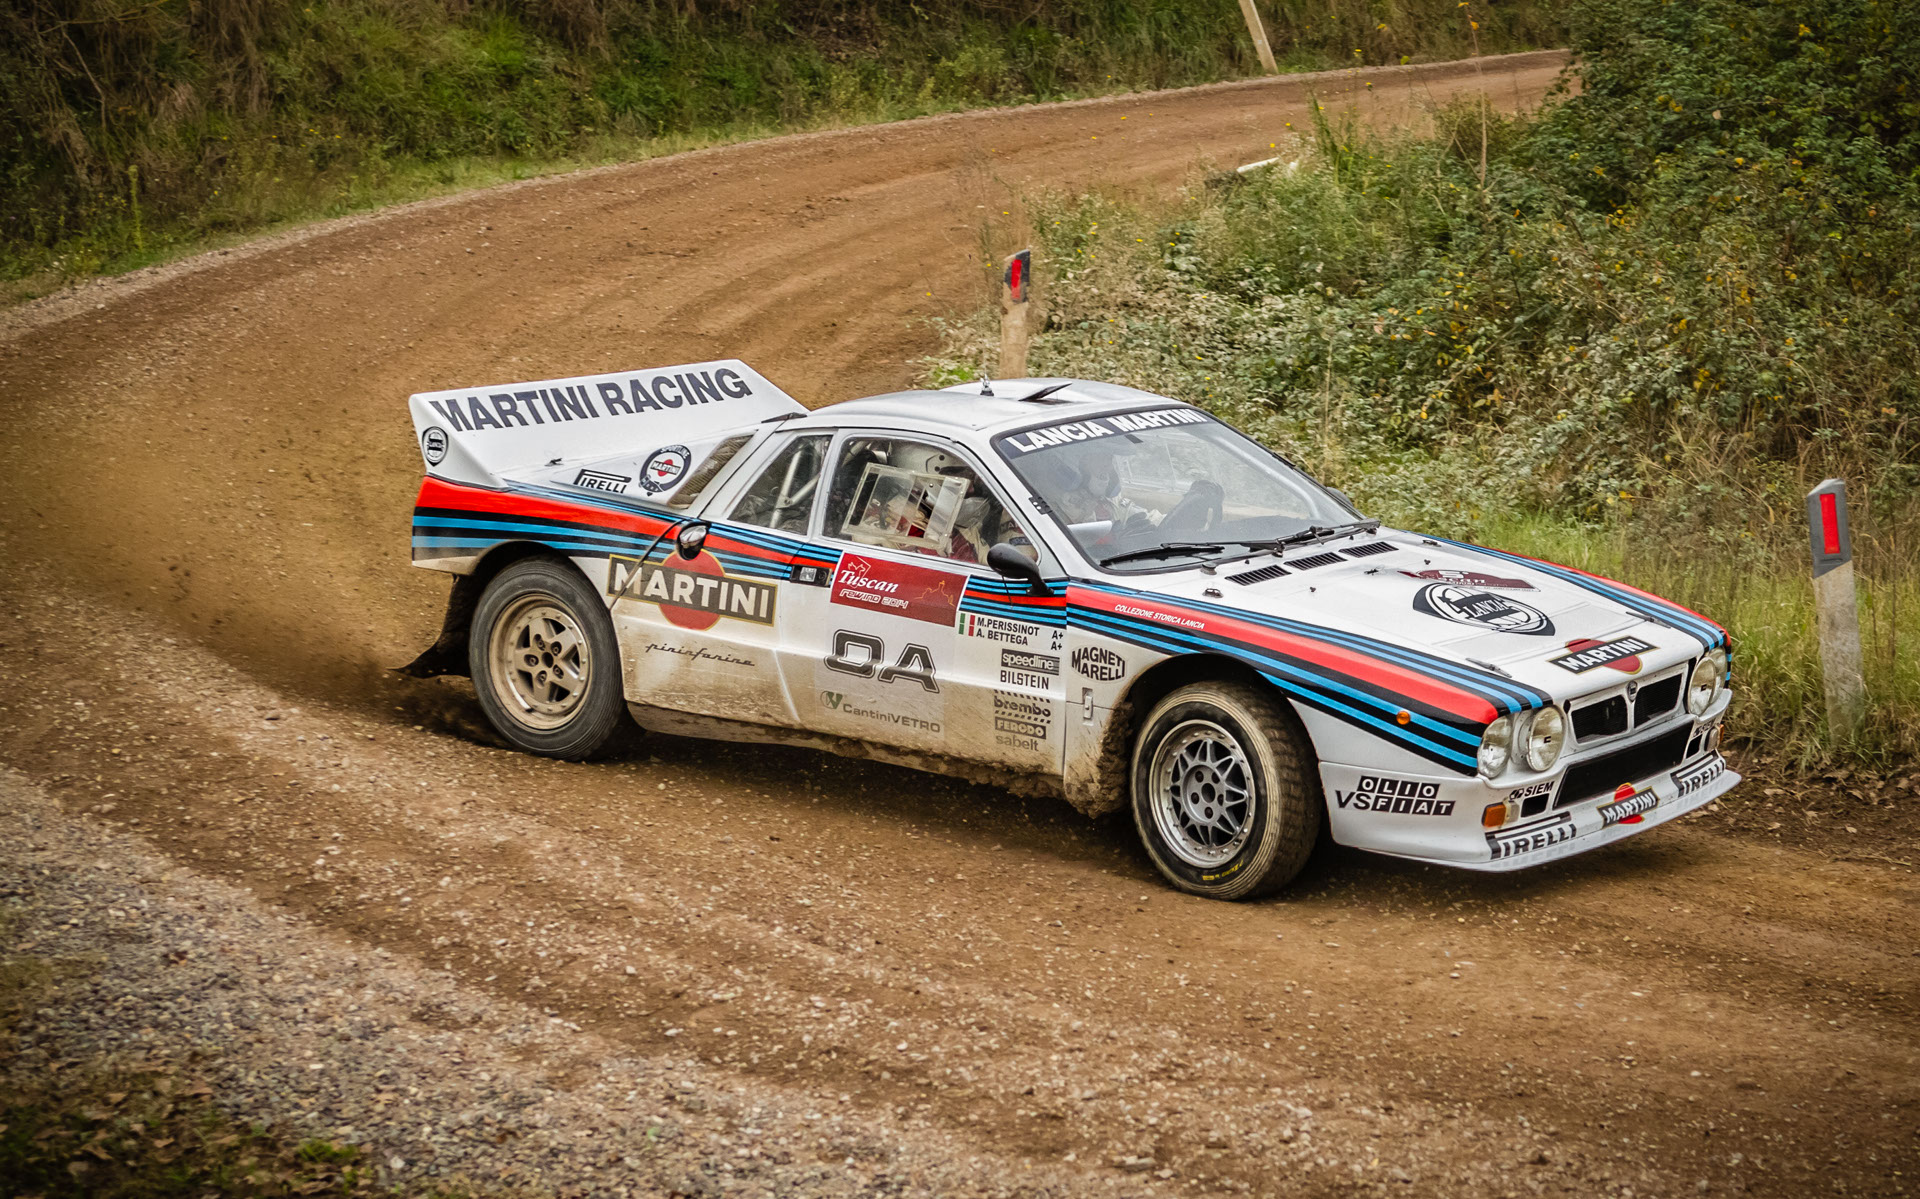 Tuscan Rewind 2014 - Derapata Lancia 037 Martini...